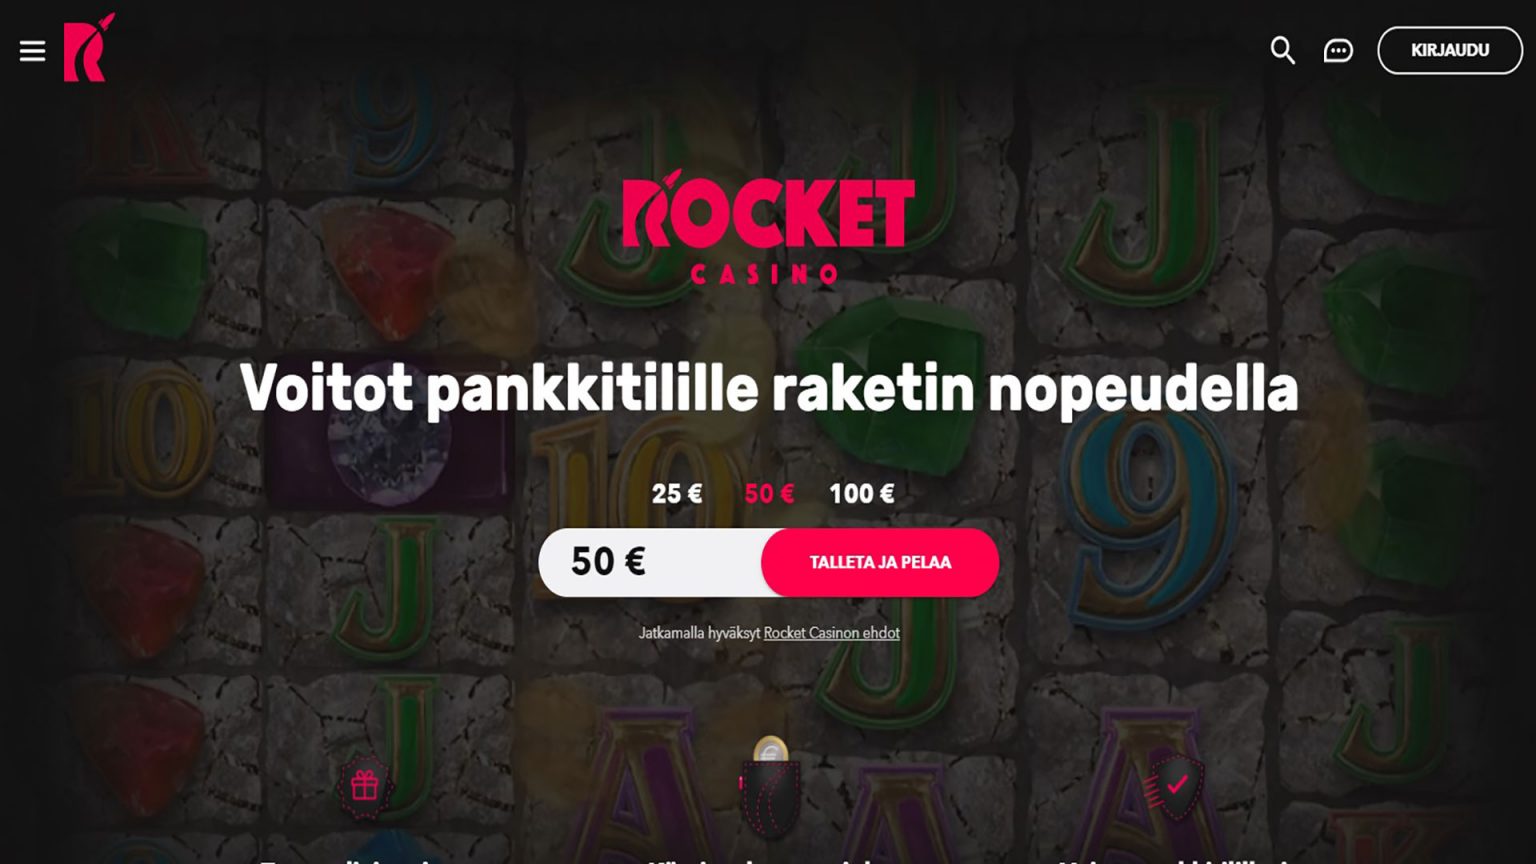 Casino Rocket mobiilikasino